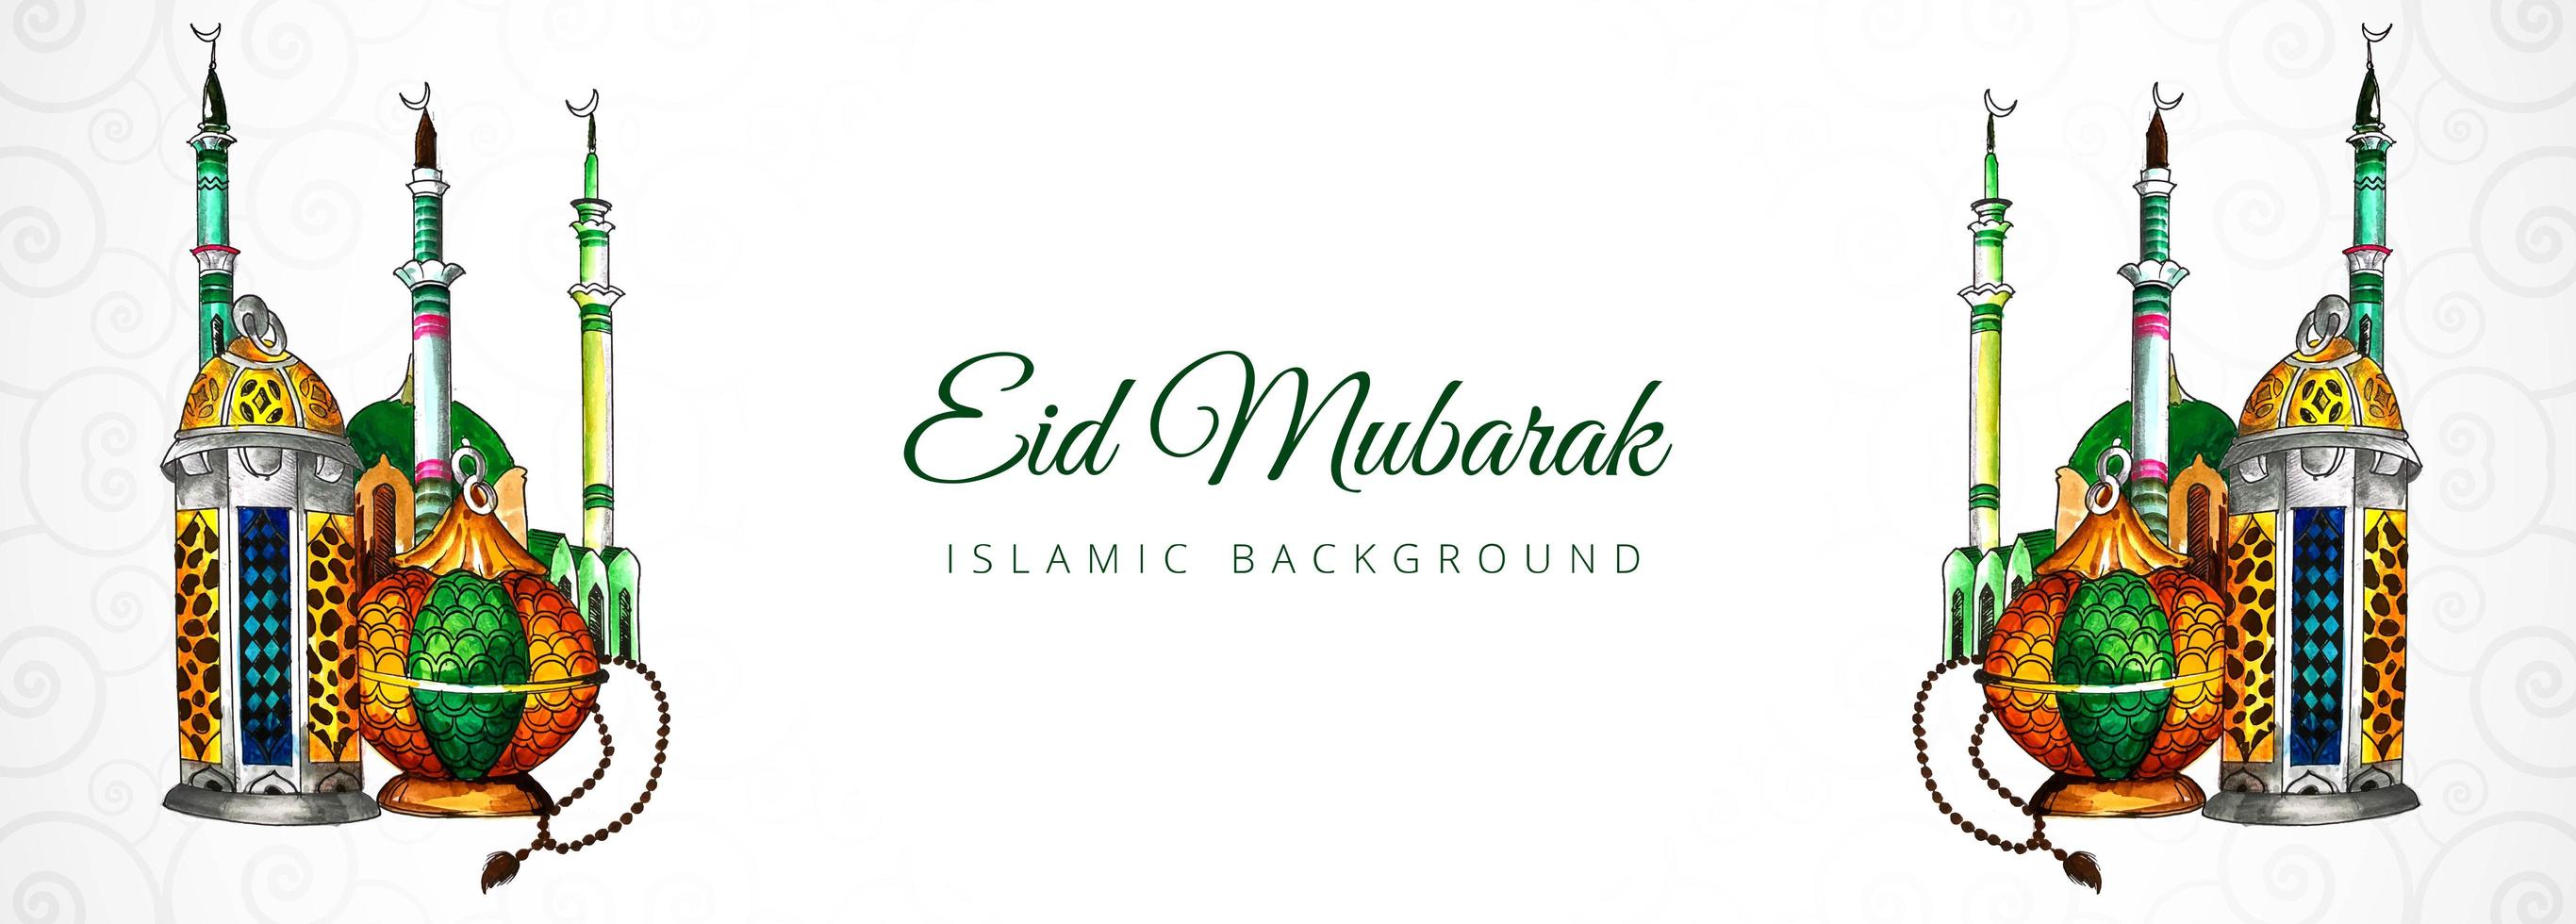 Islamic eid mubarak banner with lantern and mosque  vector